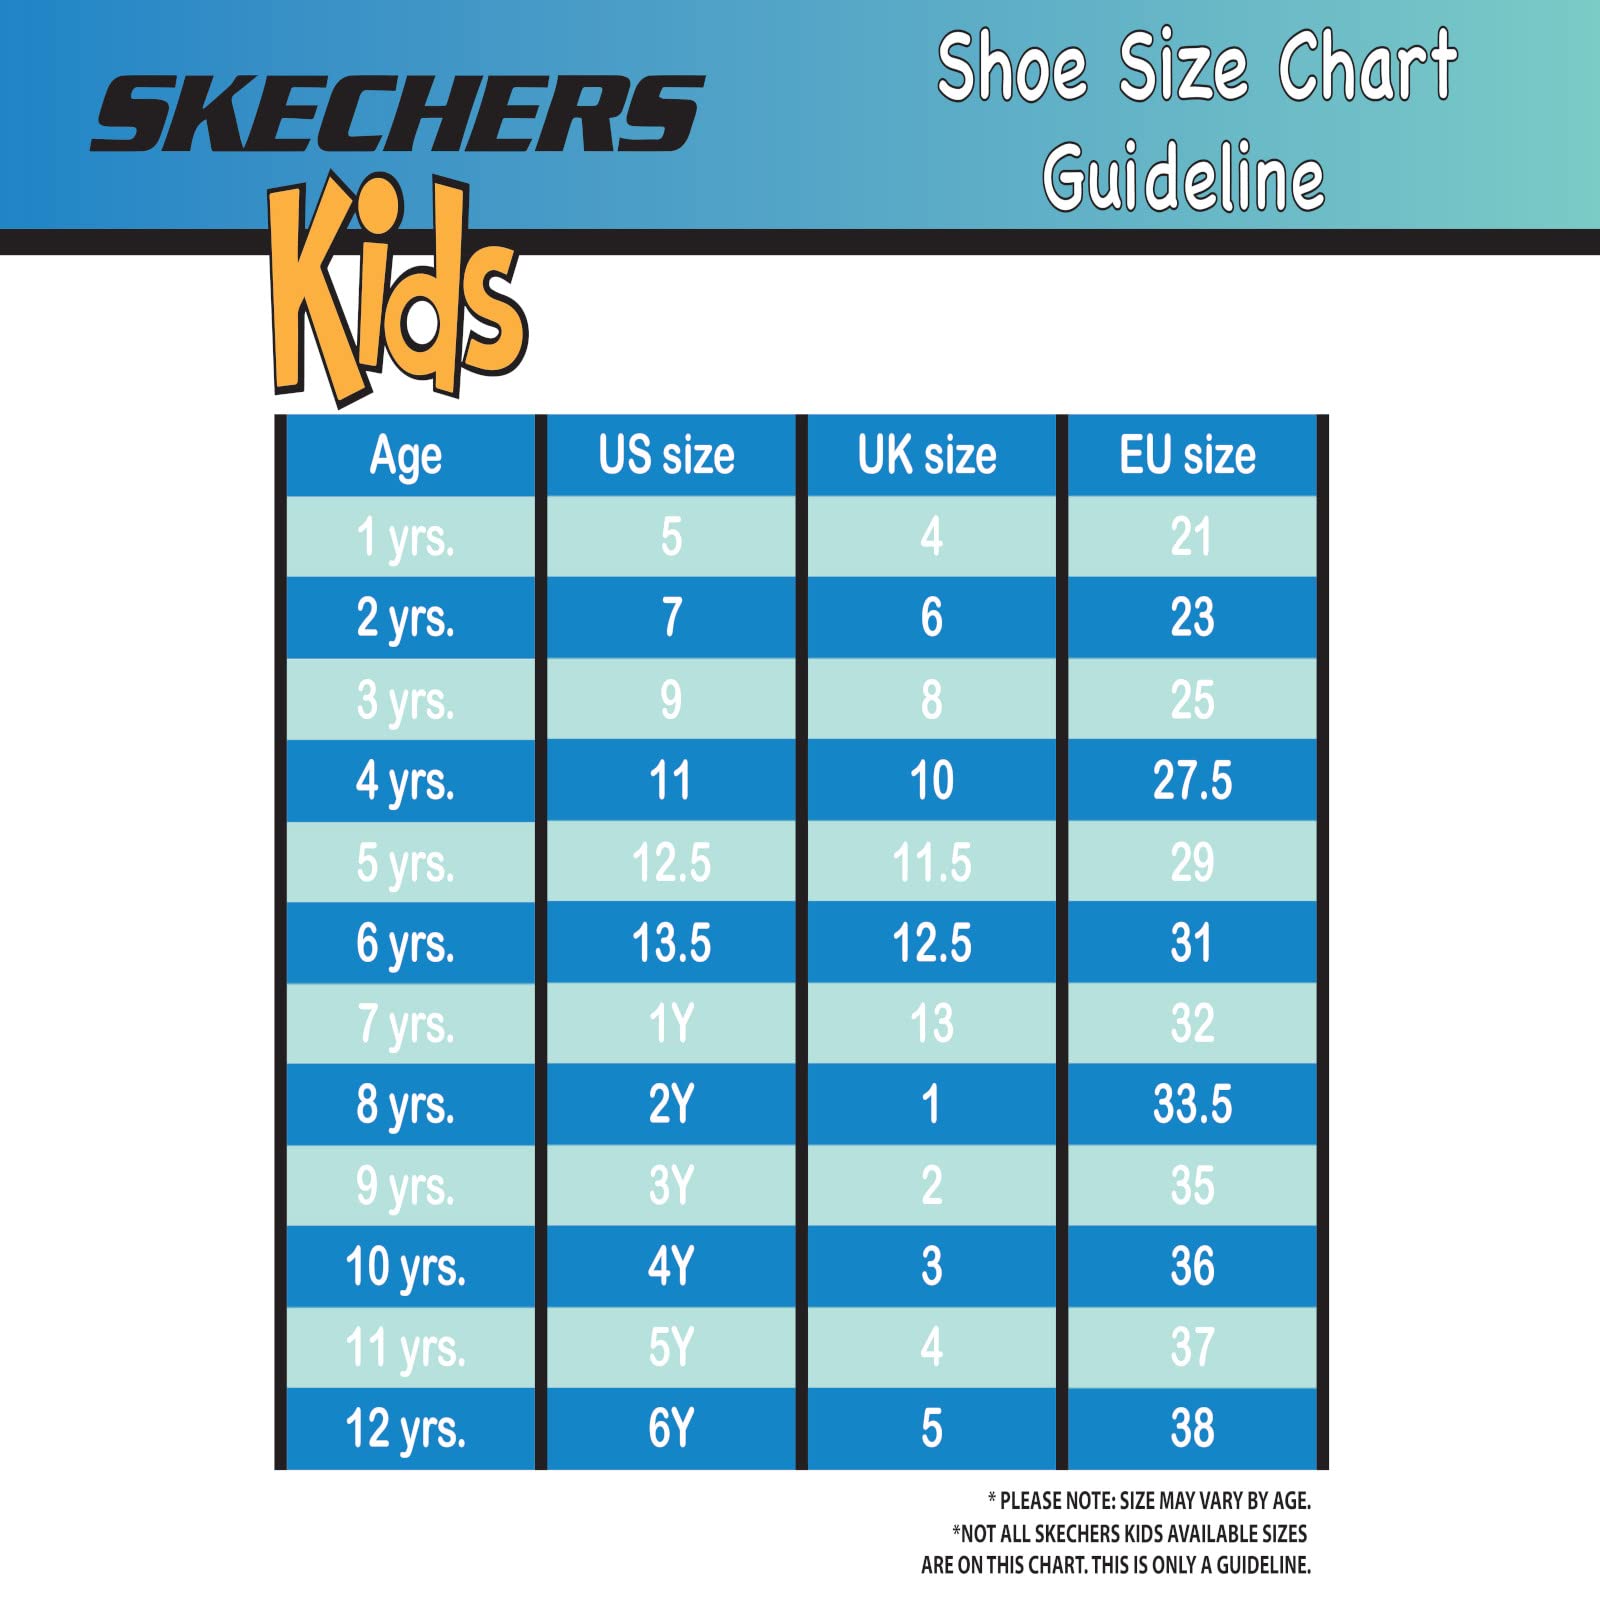 Skechers Unisex-Child Uno Ice Sneaker